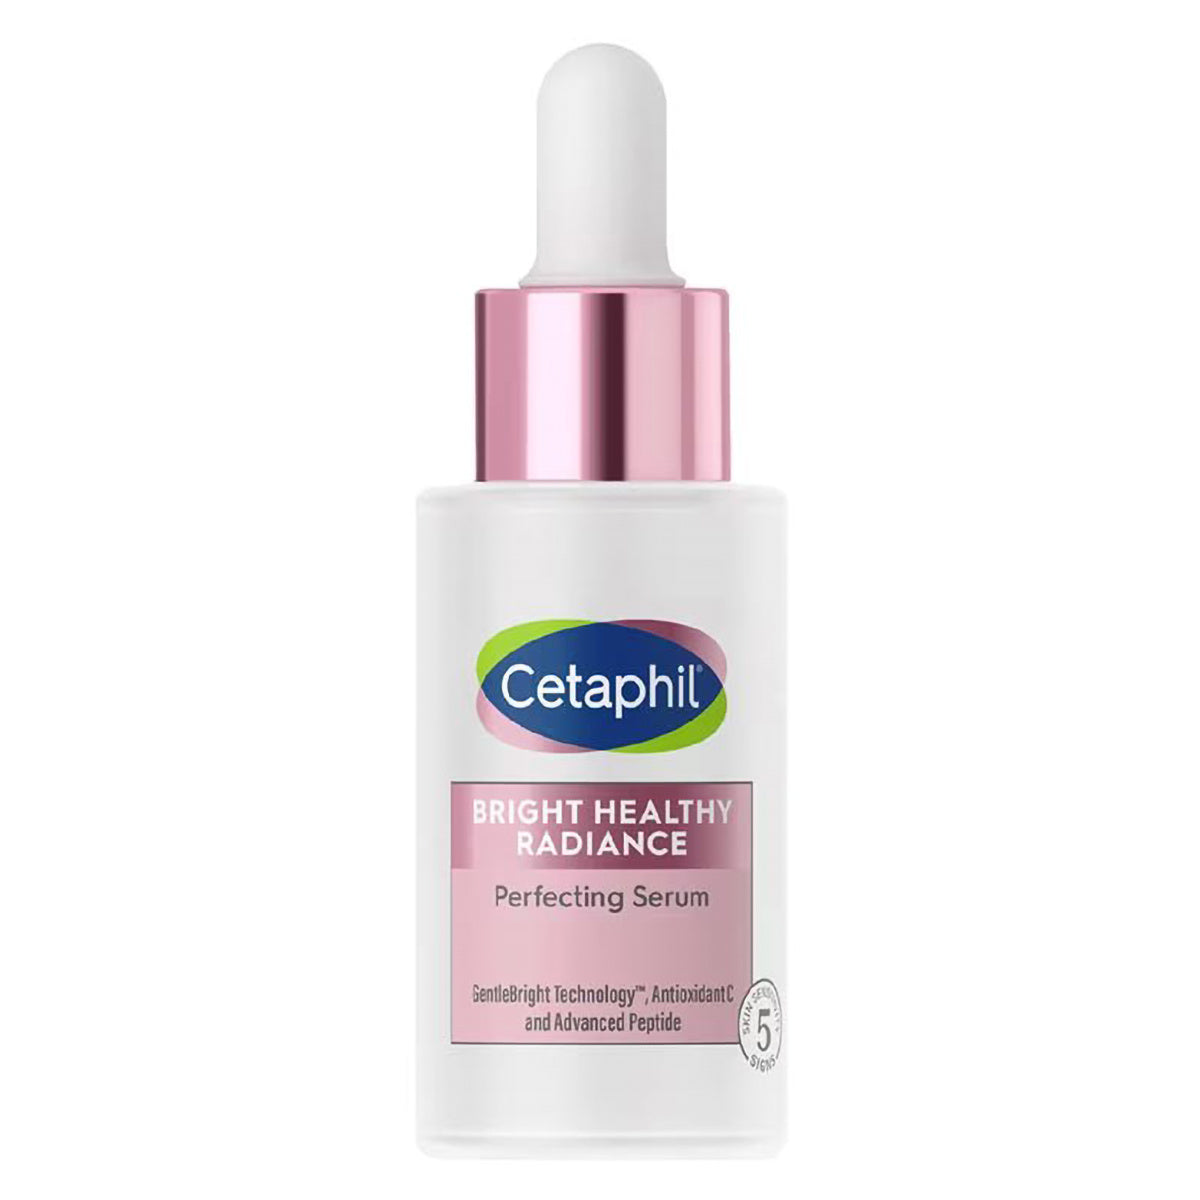 Cetaphil Bright Healthy Radiance Perfecting Serum, 30ml